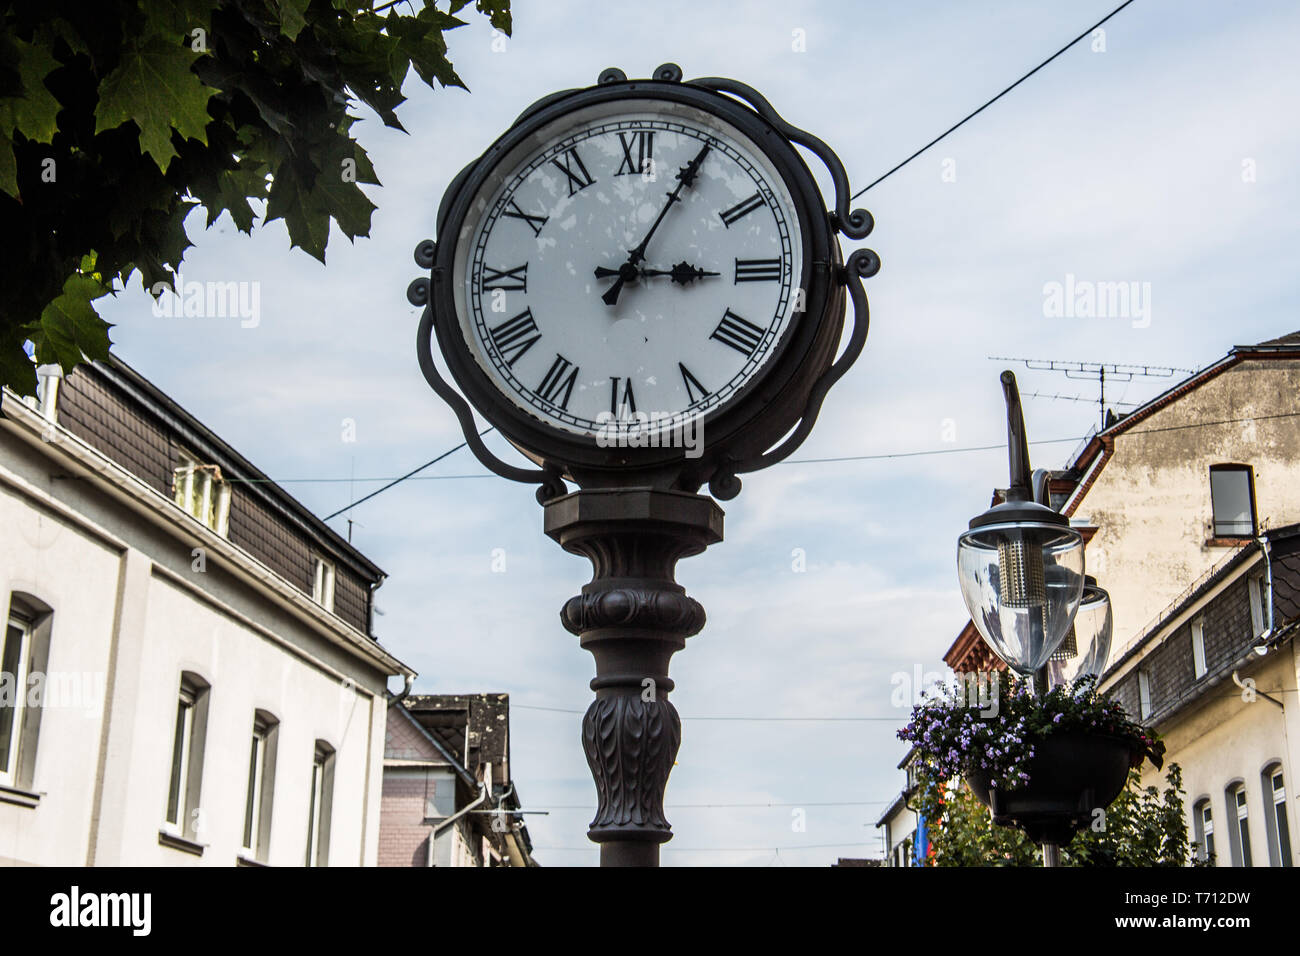 Grandfather clock in pedestrian zone Stock Photo